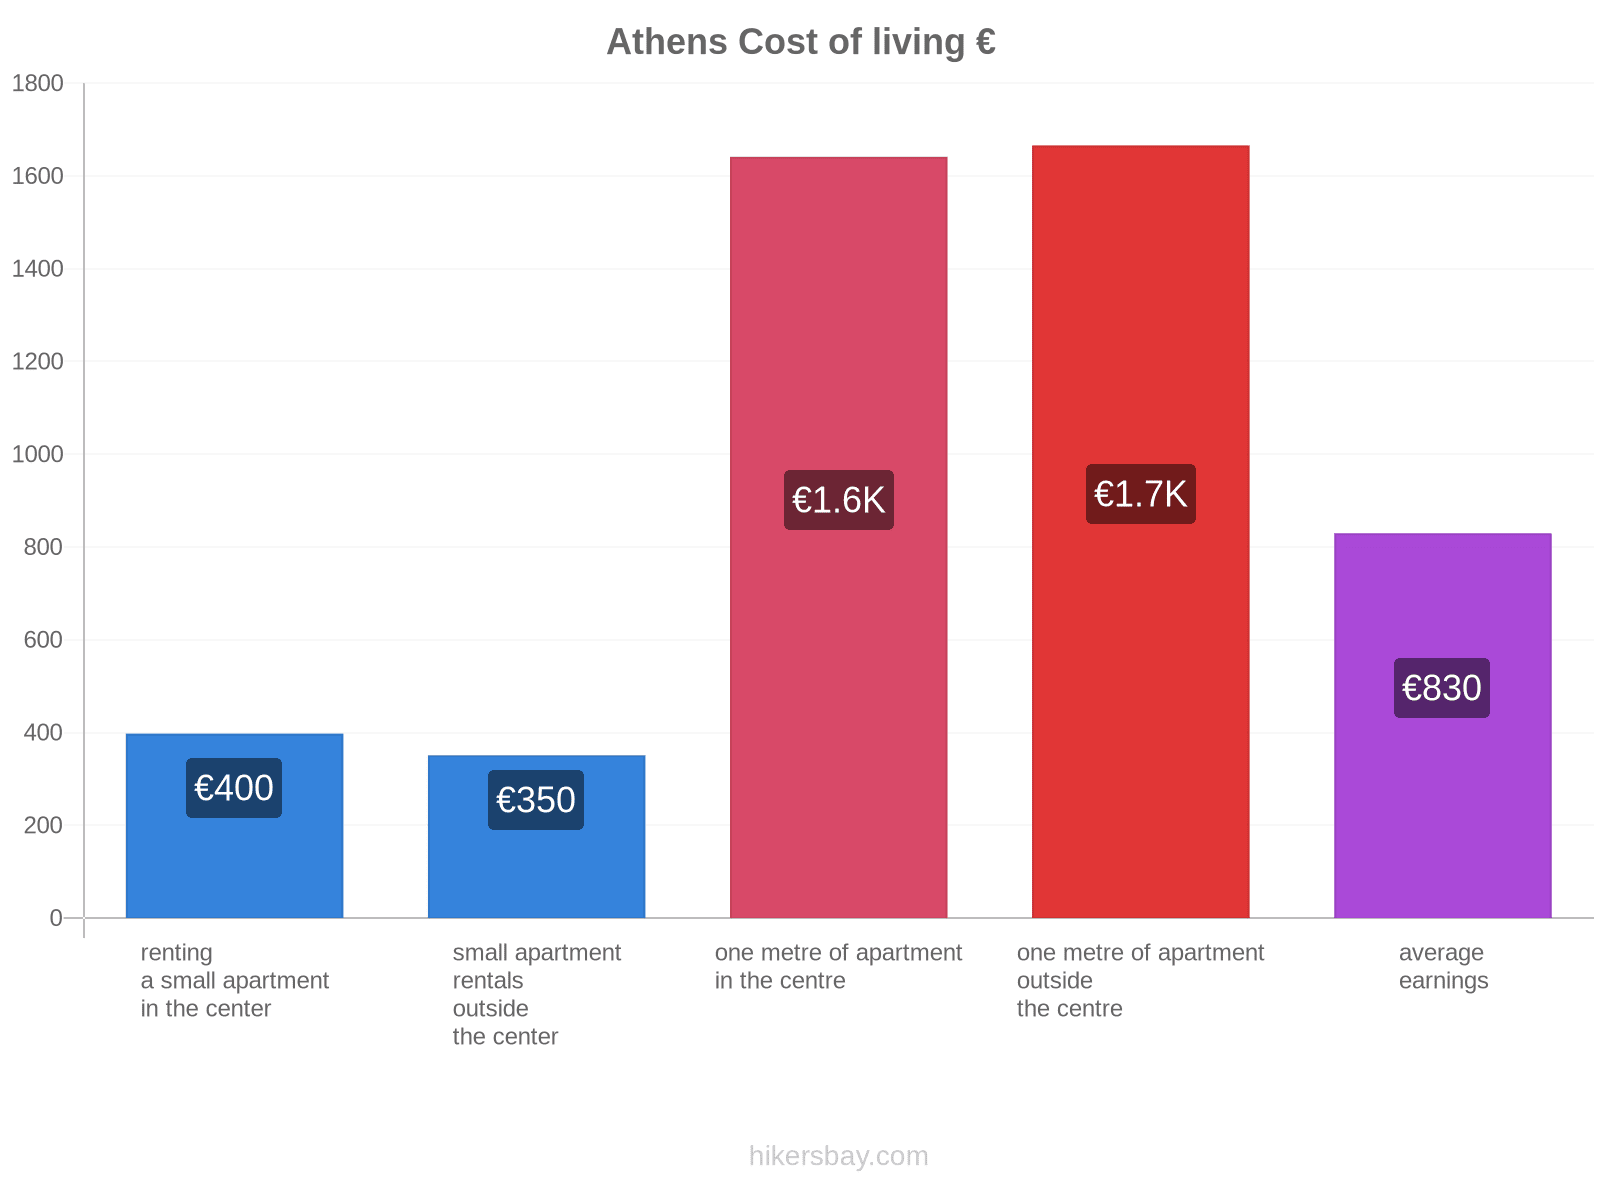 Athens cost of living hikersbay.com